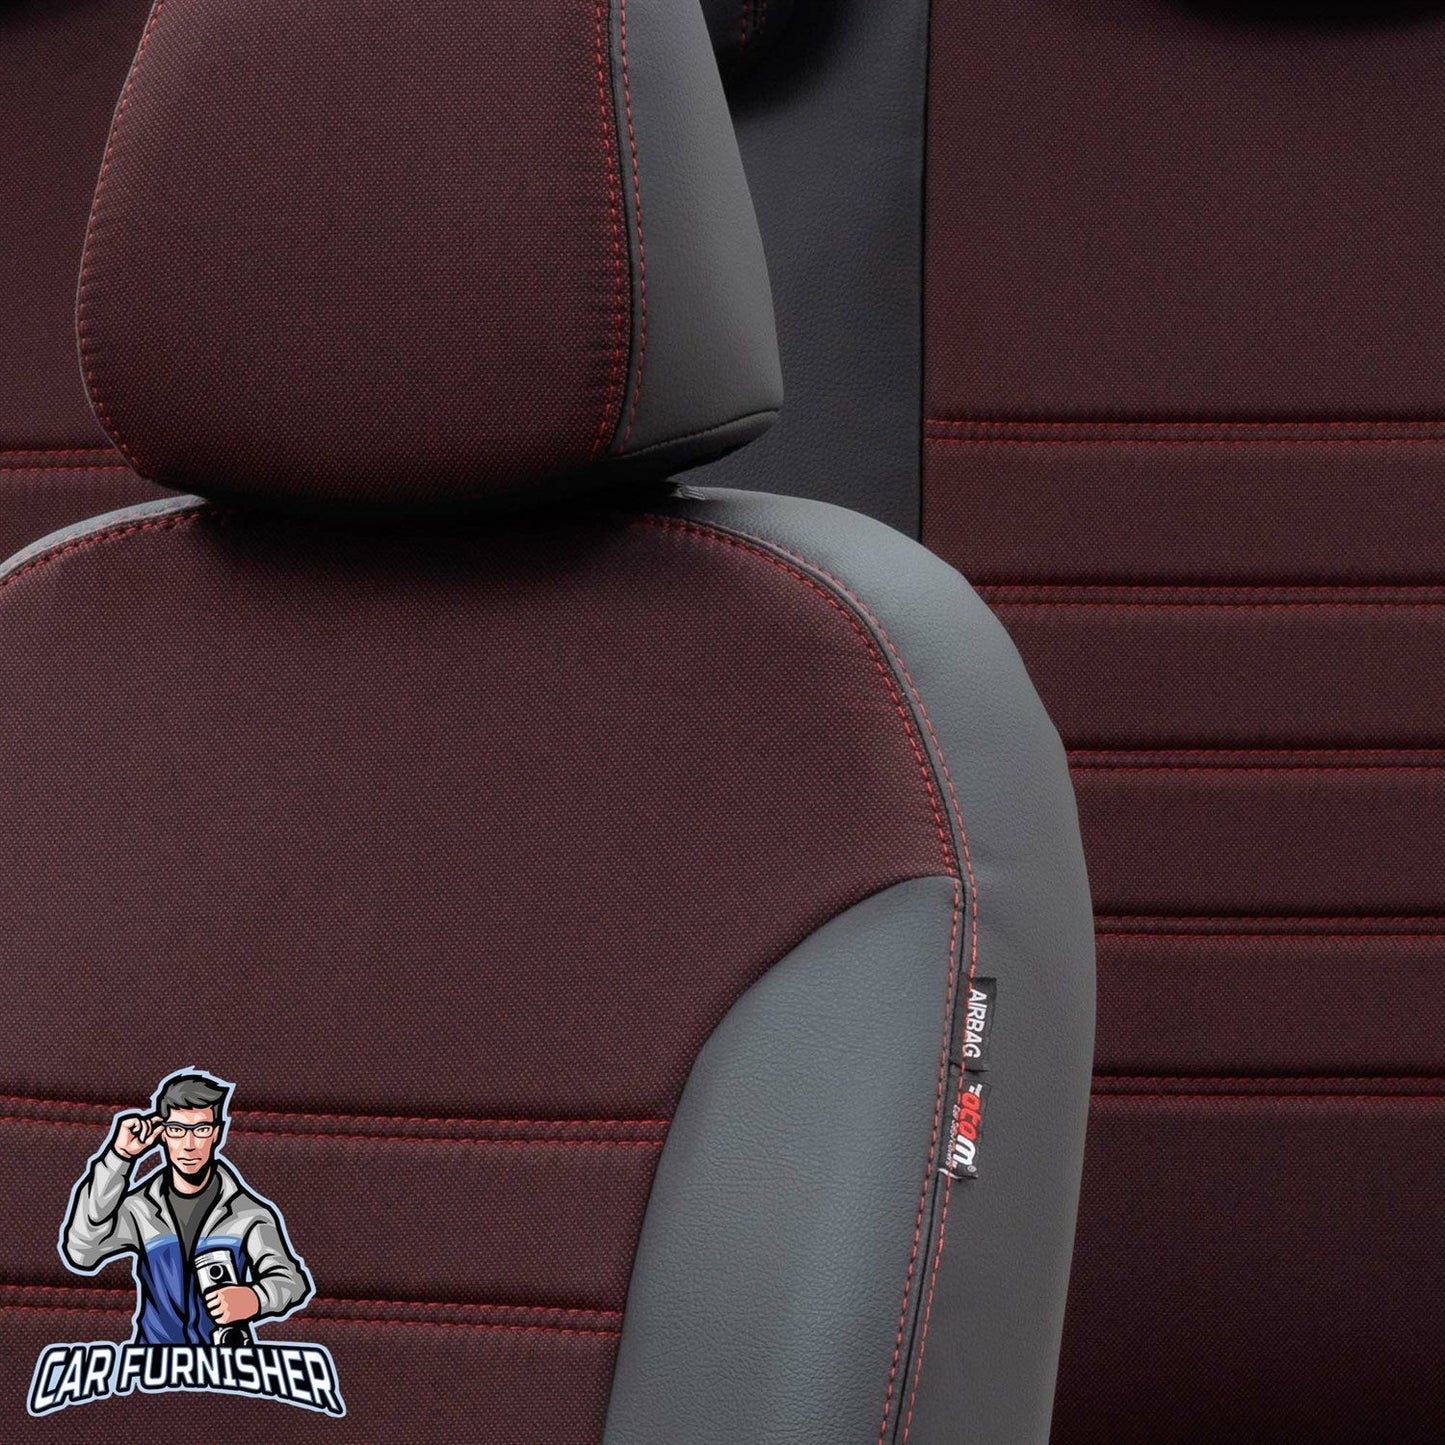 Daihatsu Terios Seat Covers Paris Leather & Jacquard Design Red Leather & Jacquard Fabric